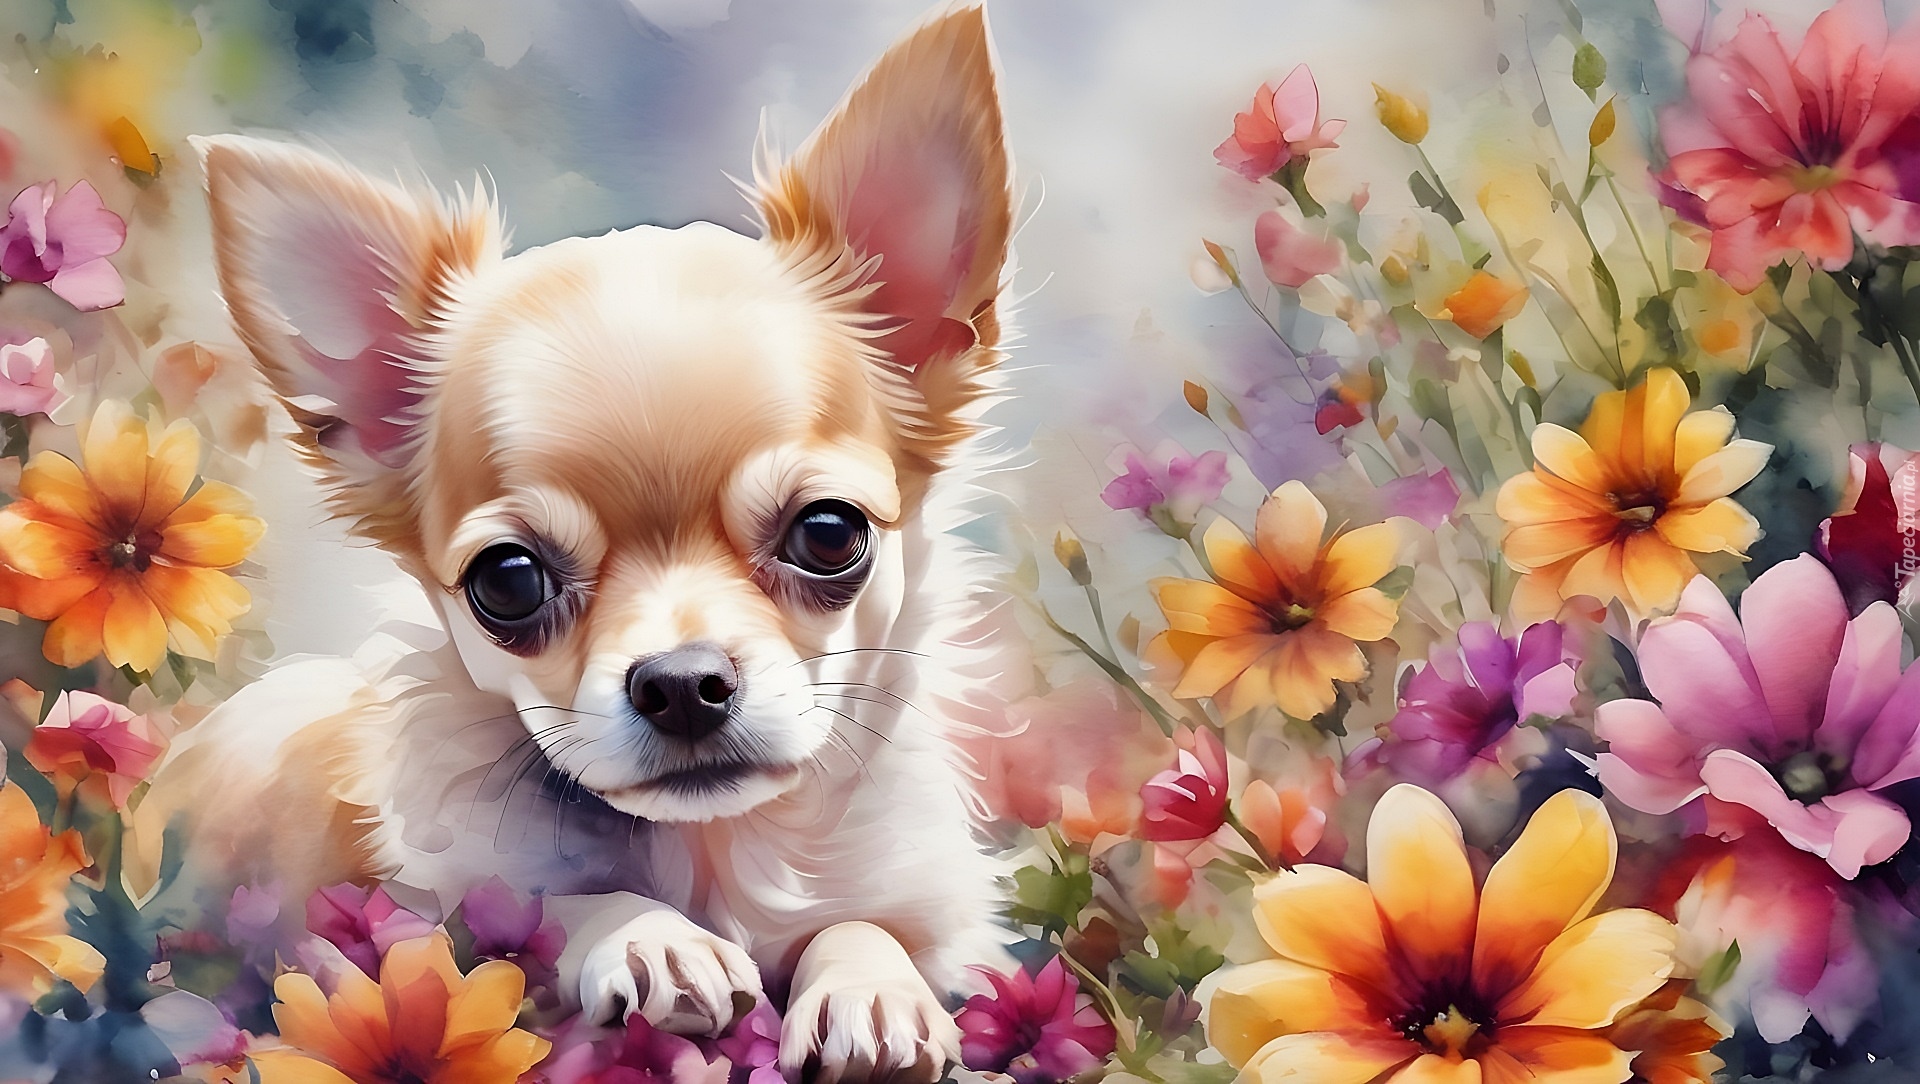 Chihuahua, Pies, Szczeniak, Kwiaty, Akwarela, Grafika